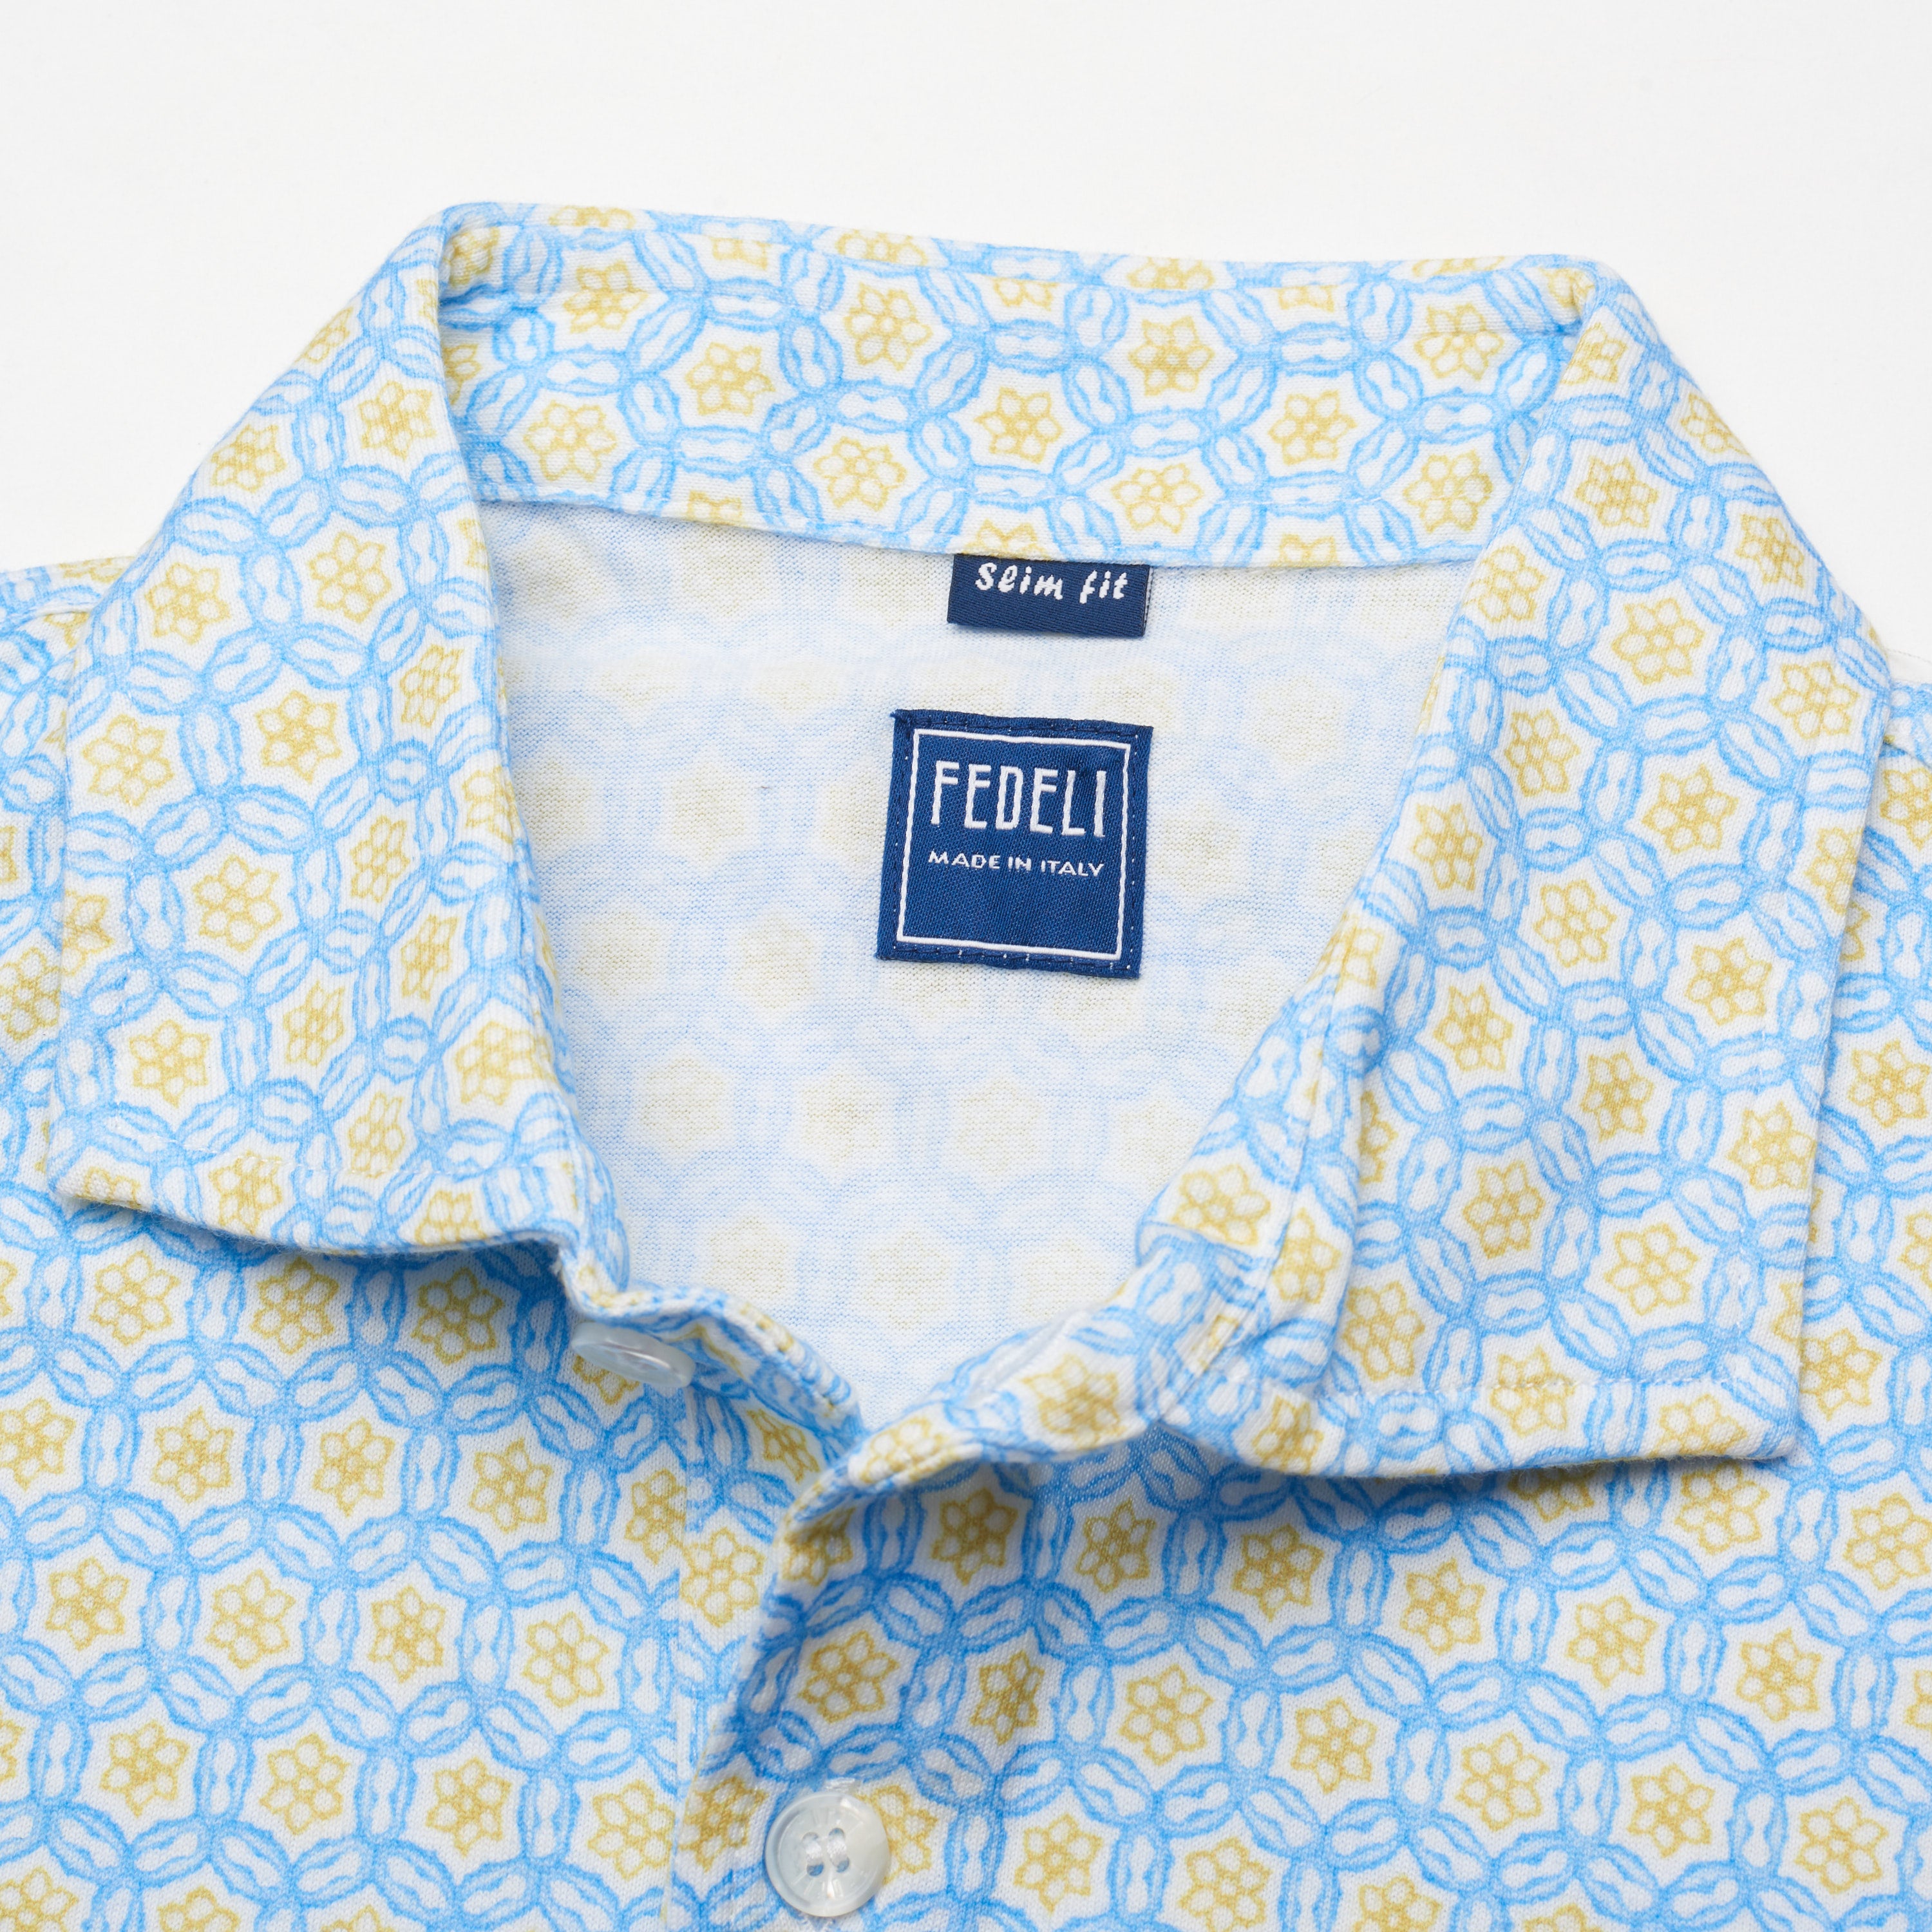 FEDELI "Zero" Blue-Yellow Floral Medallion Cotton Jersey Supima Polo Shirt NEW FEDELI